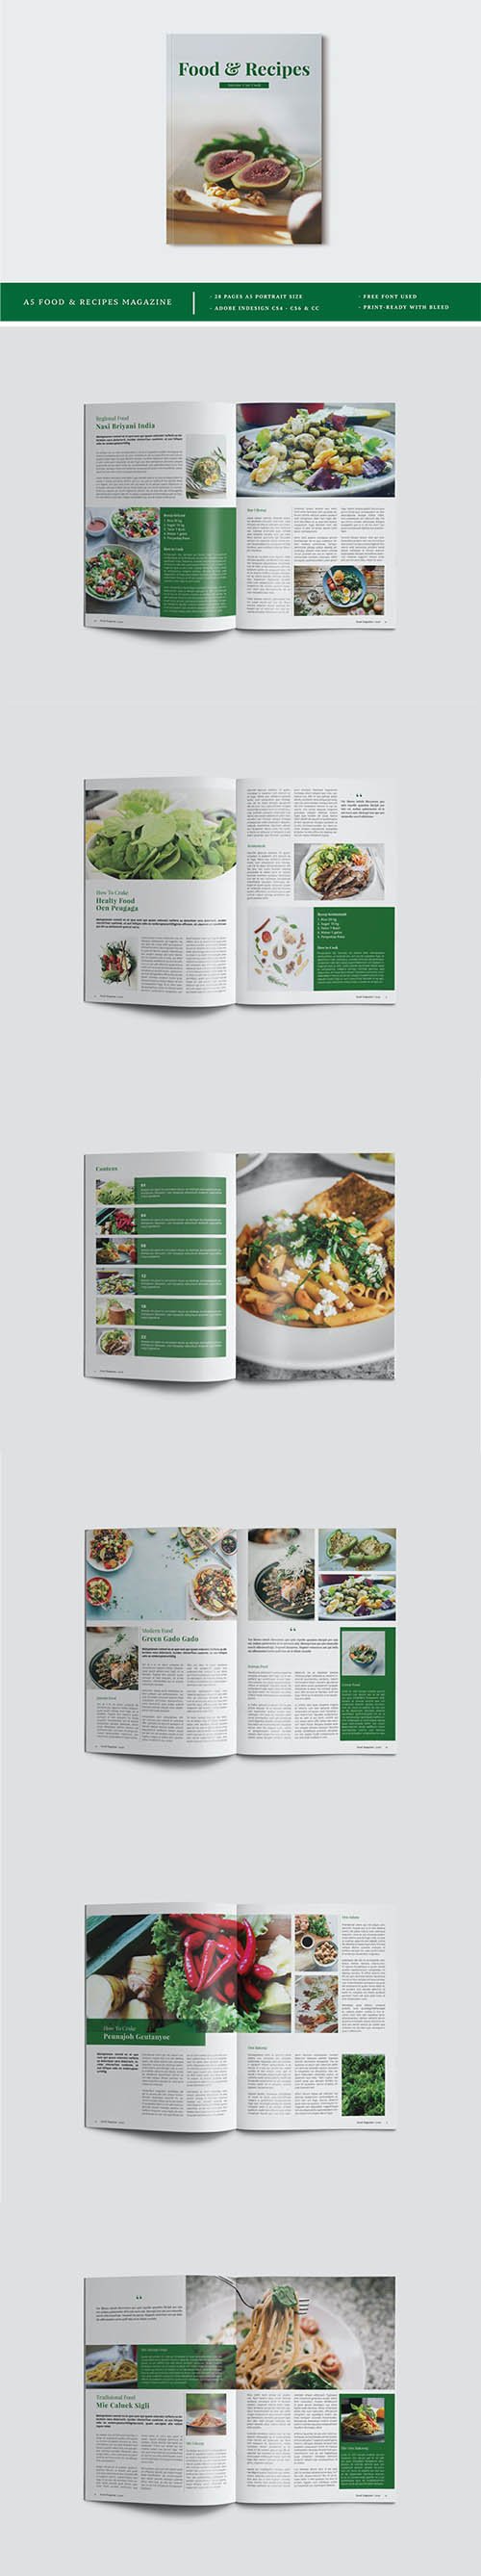 A5 Food & Recipes Magazine